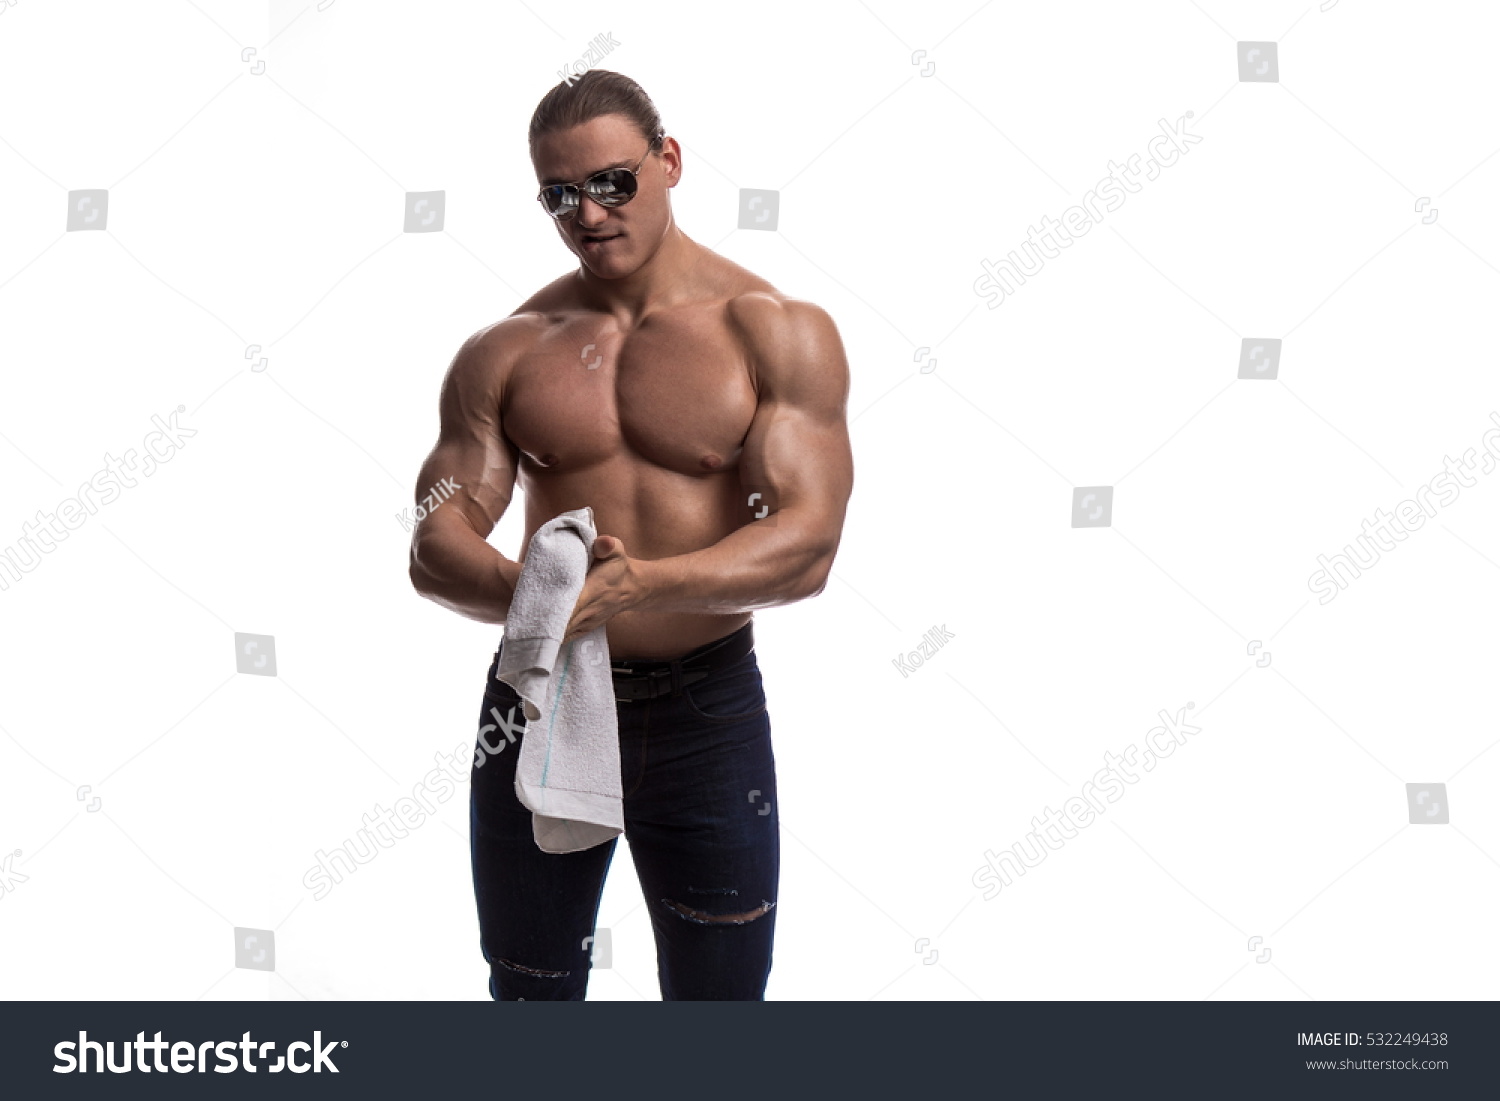 Male Bodybuilder Athlete Naked Torso Towel Nh C S N Shutterstock